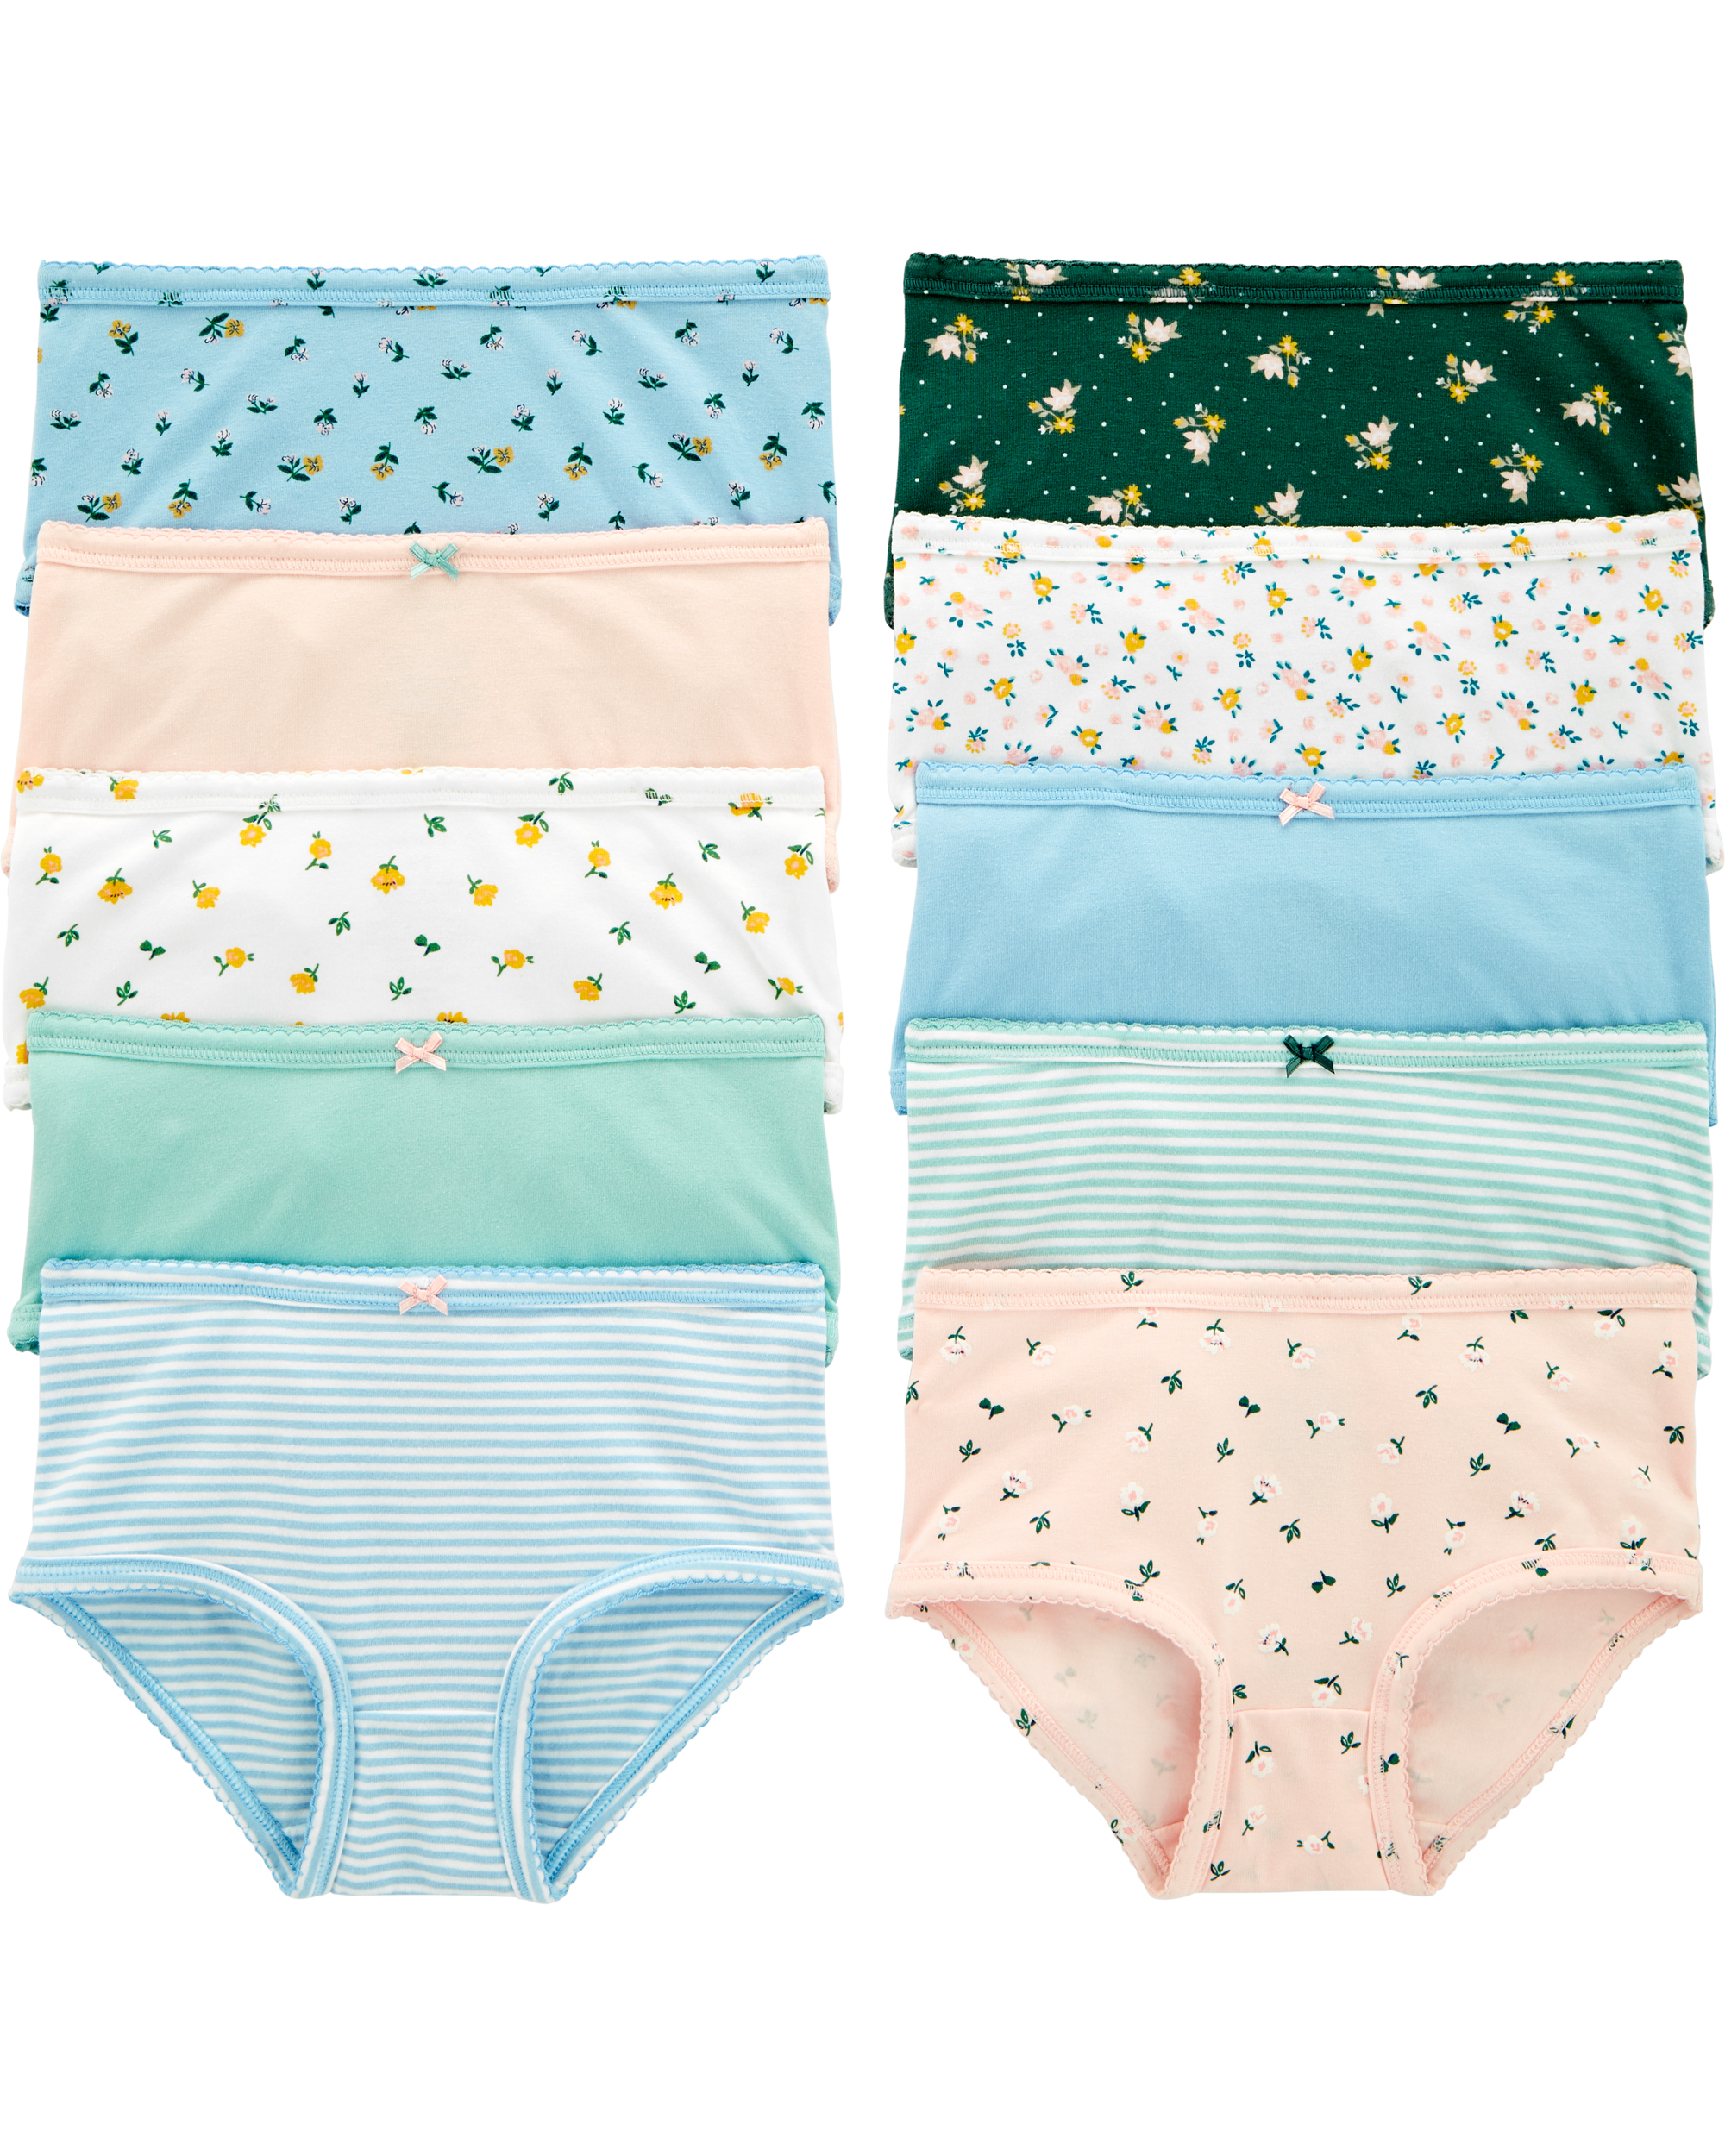 Best Deal for KikizYe Soft Cotton underwear Big Girls Panties Assorted